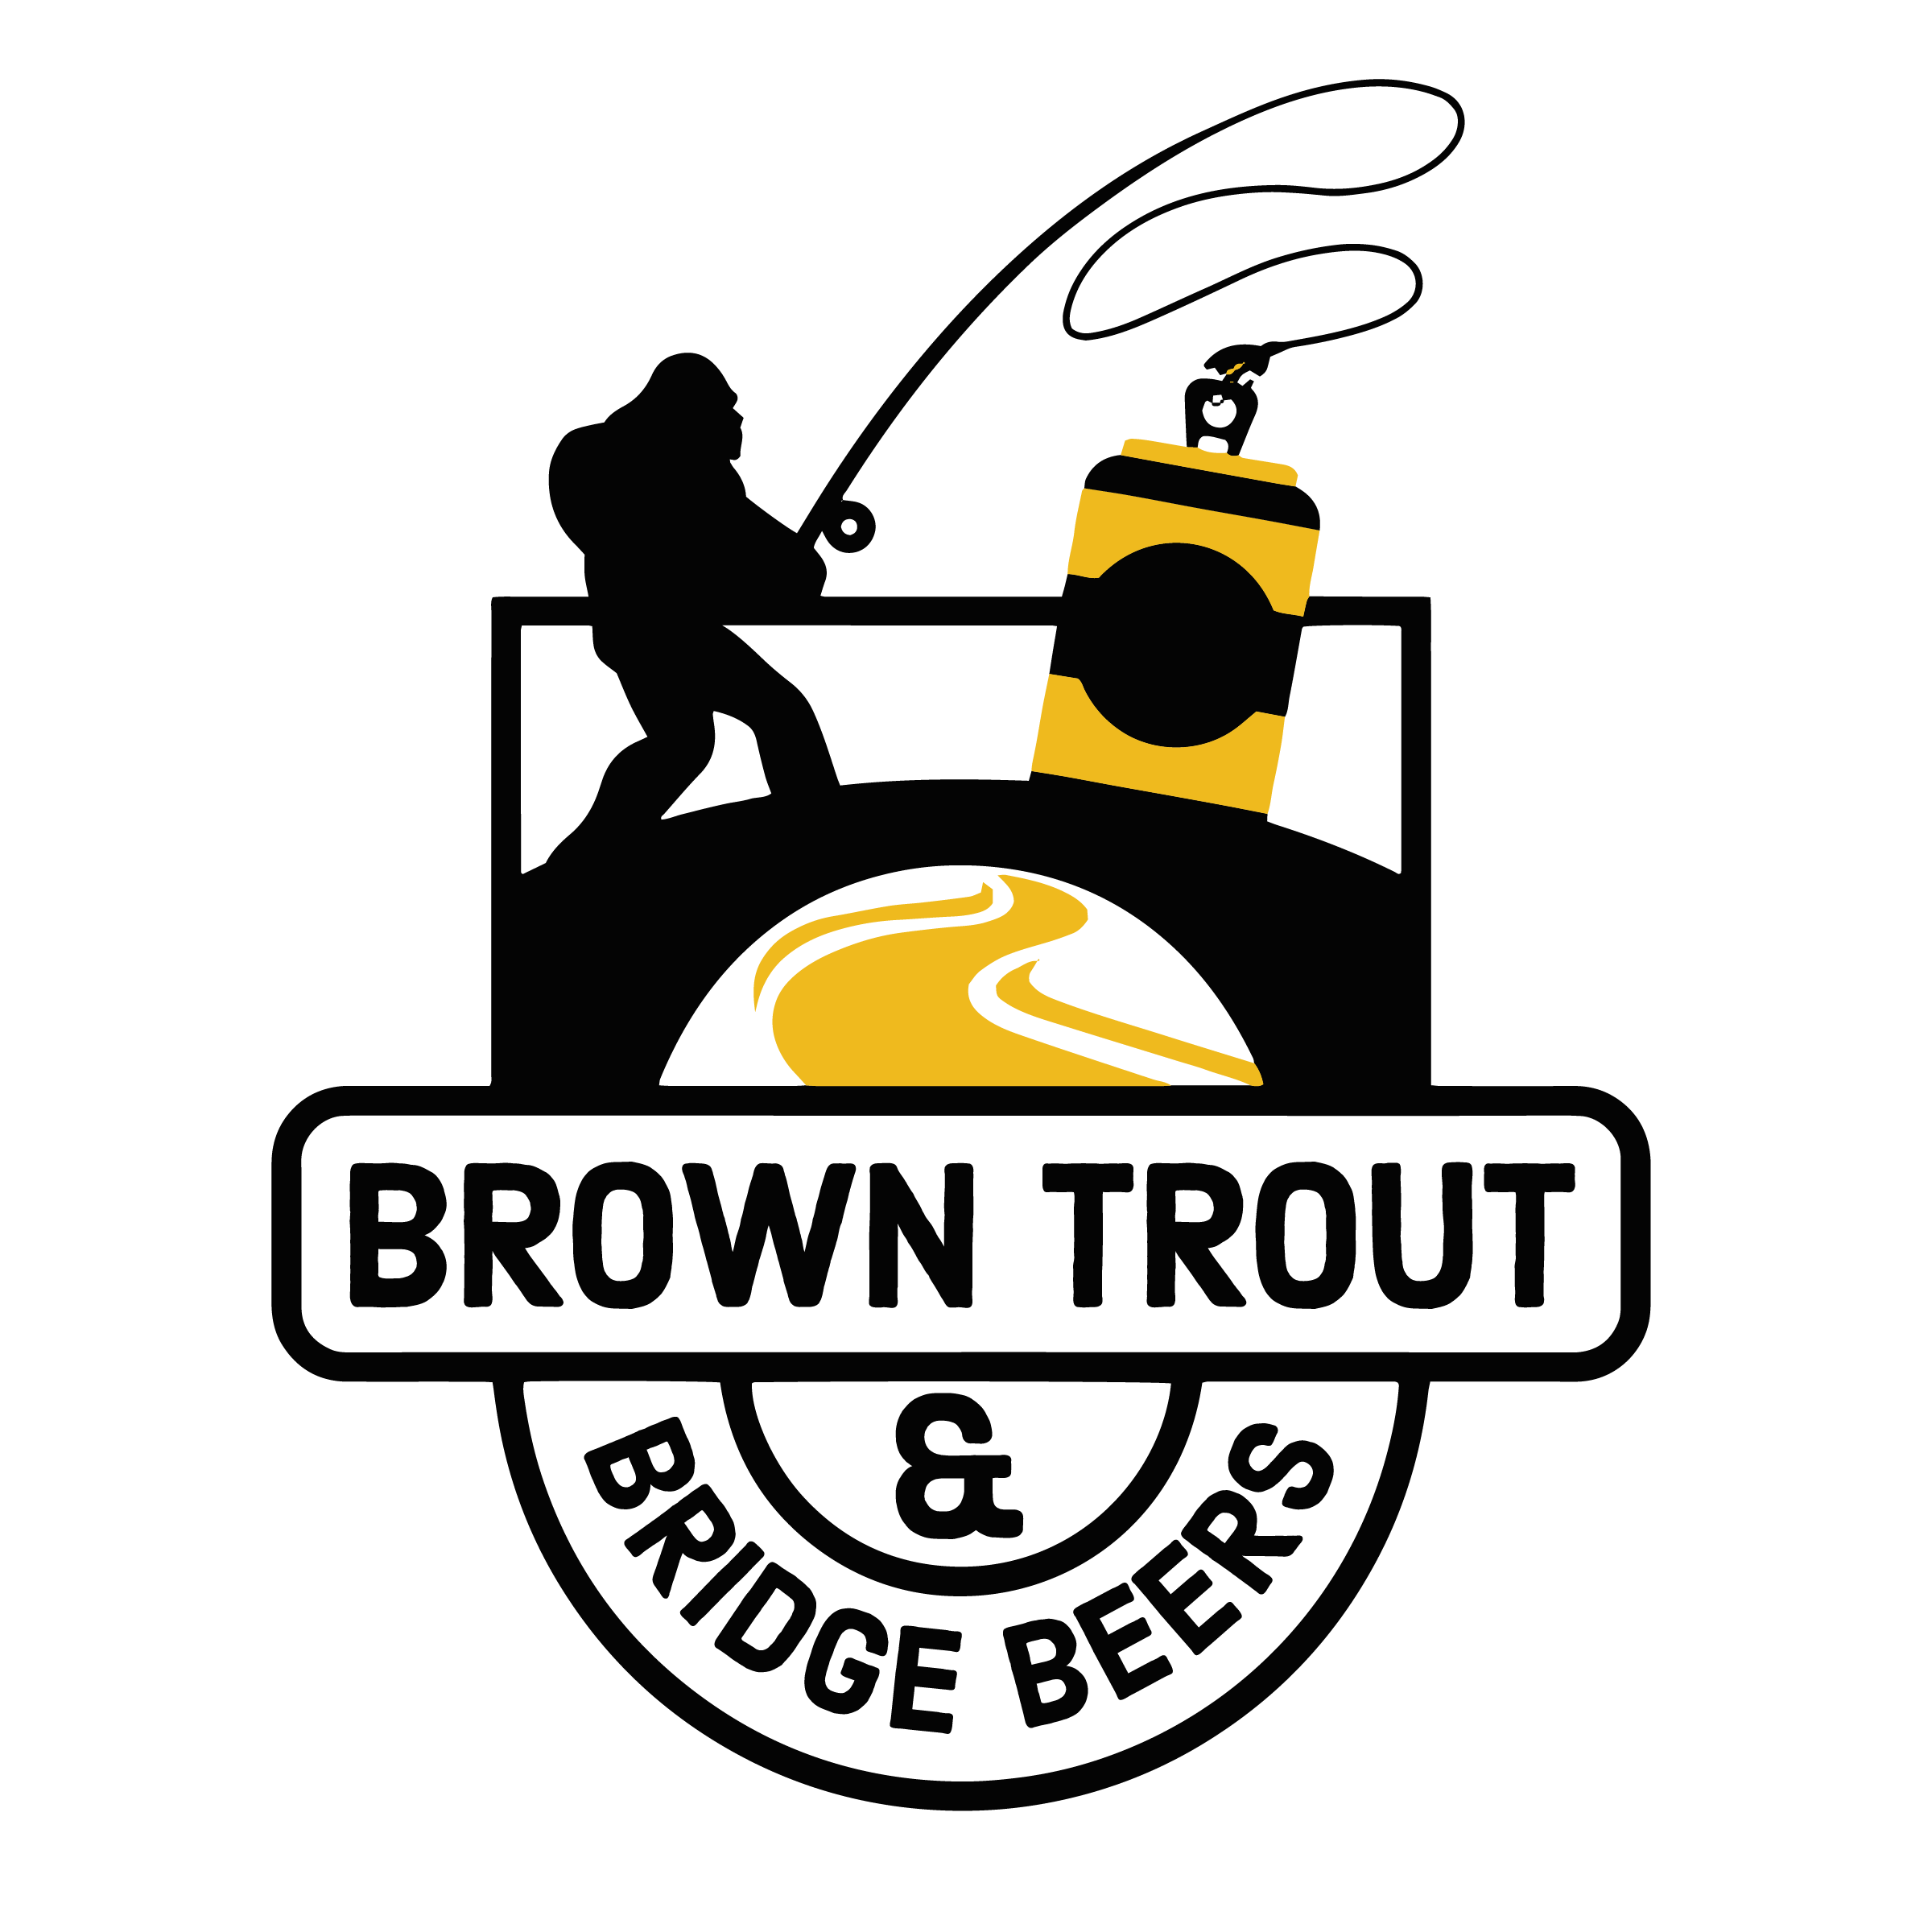 Brown Trout and Bridge Beers